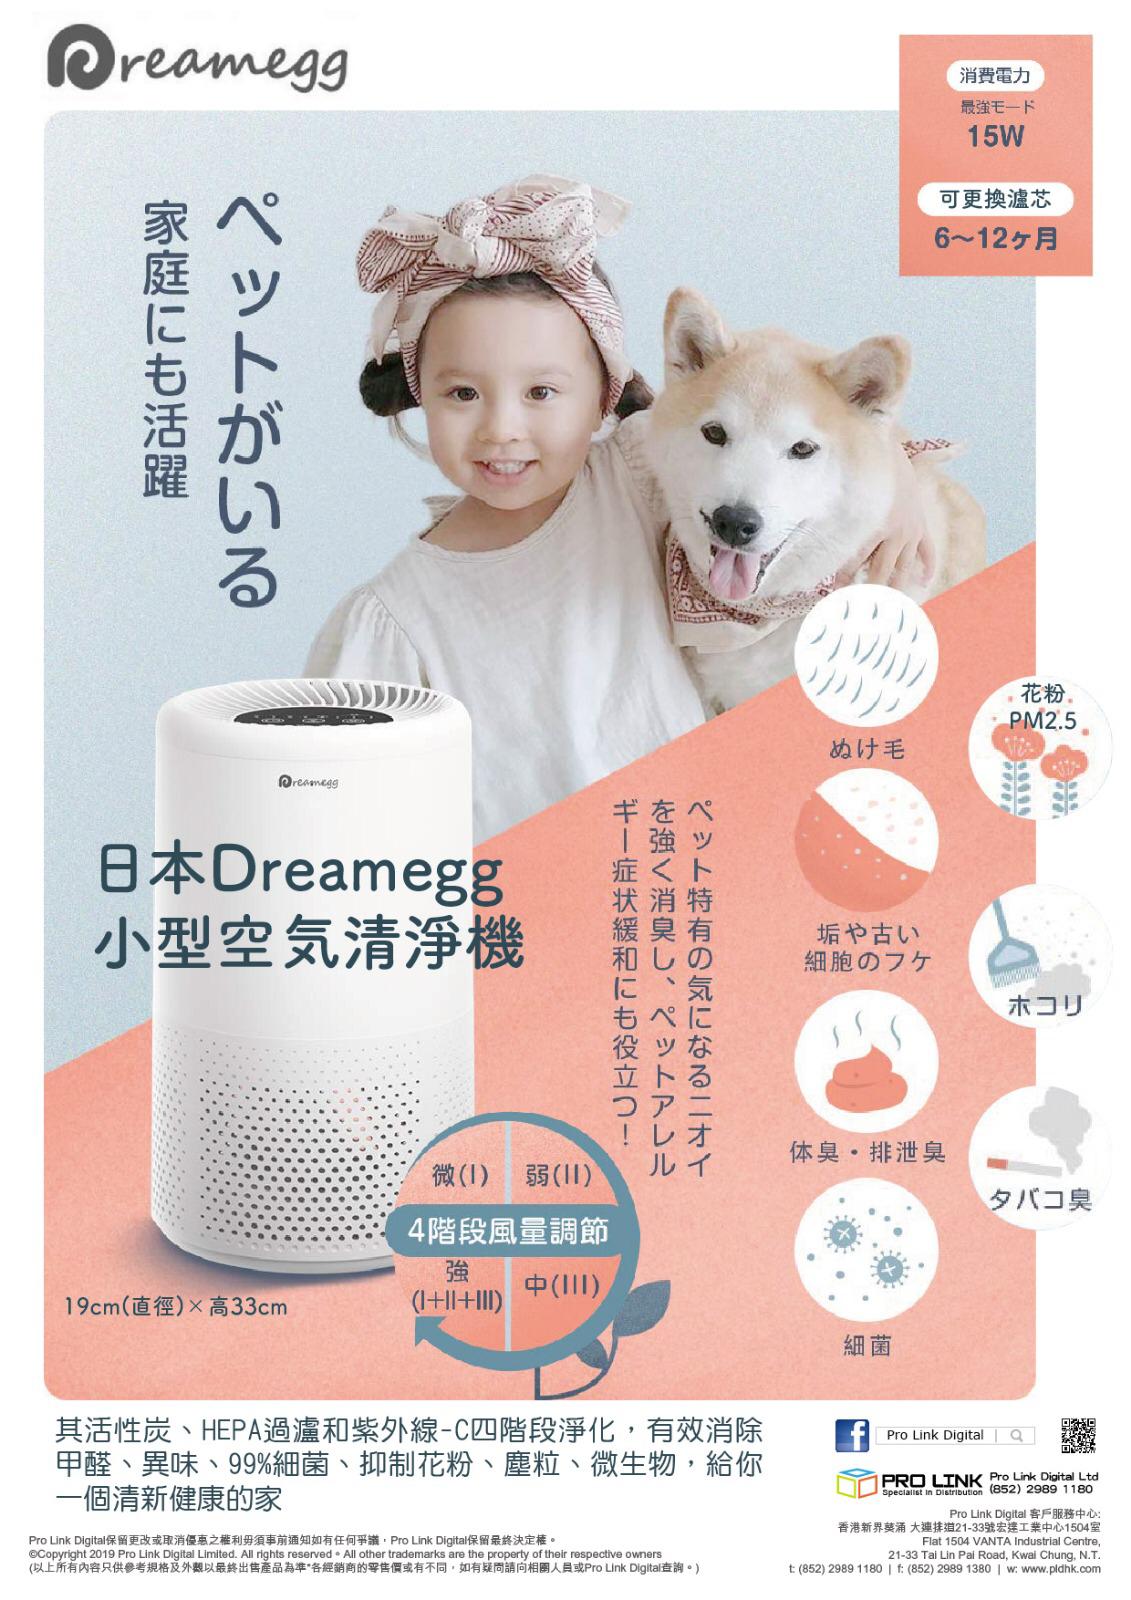 Dreamegg - Japanese DREAMEGG CF-8010 small air purifier [Hong Kong licensed product]